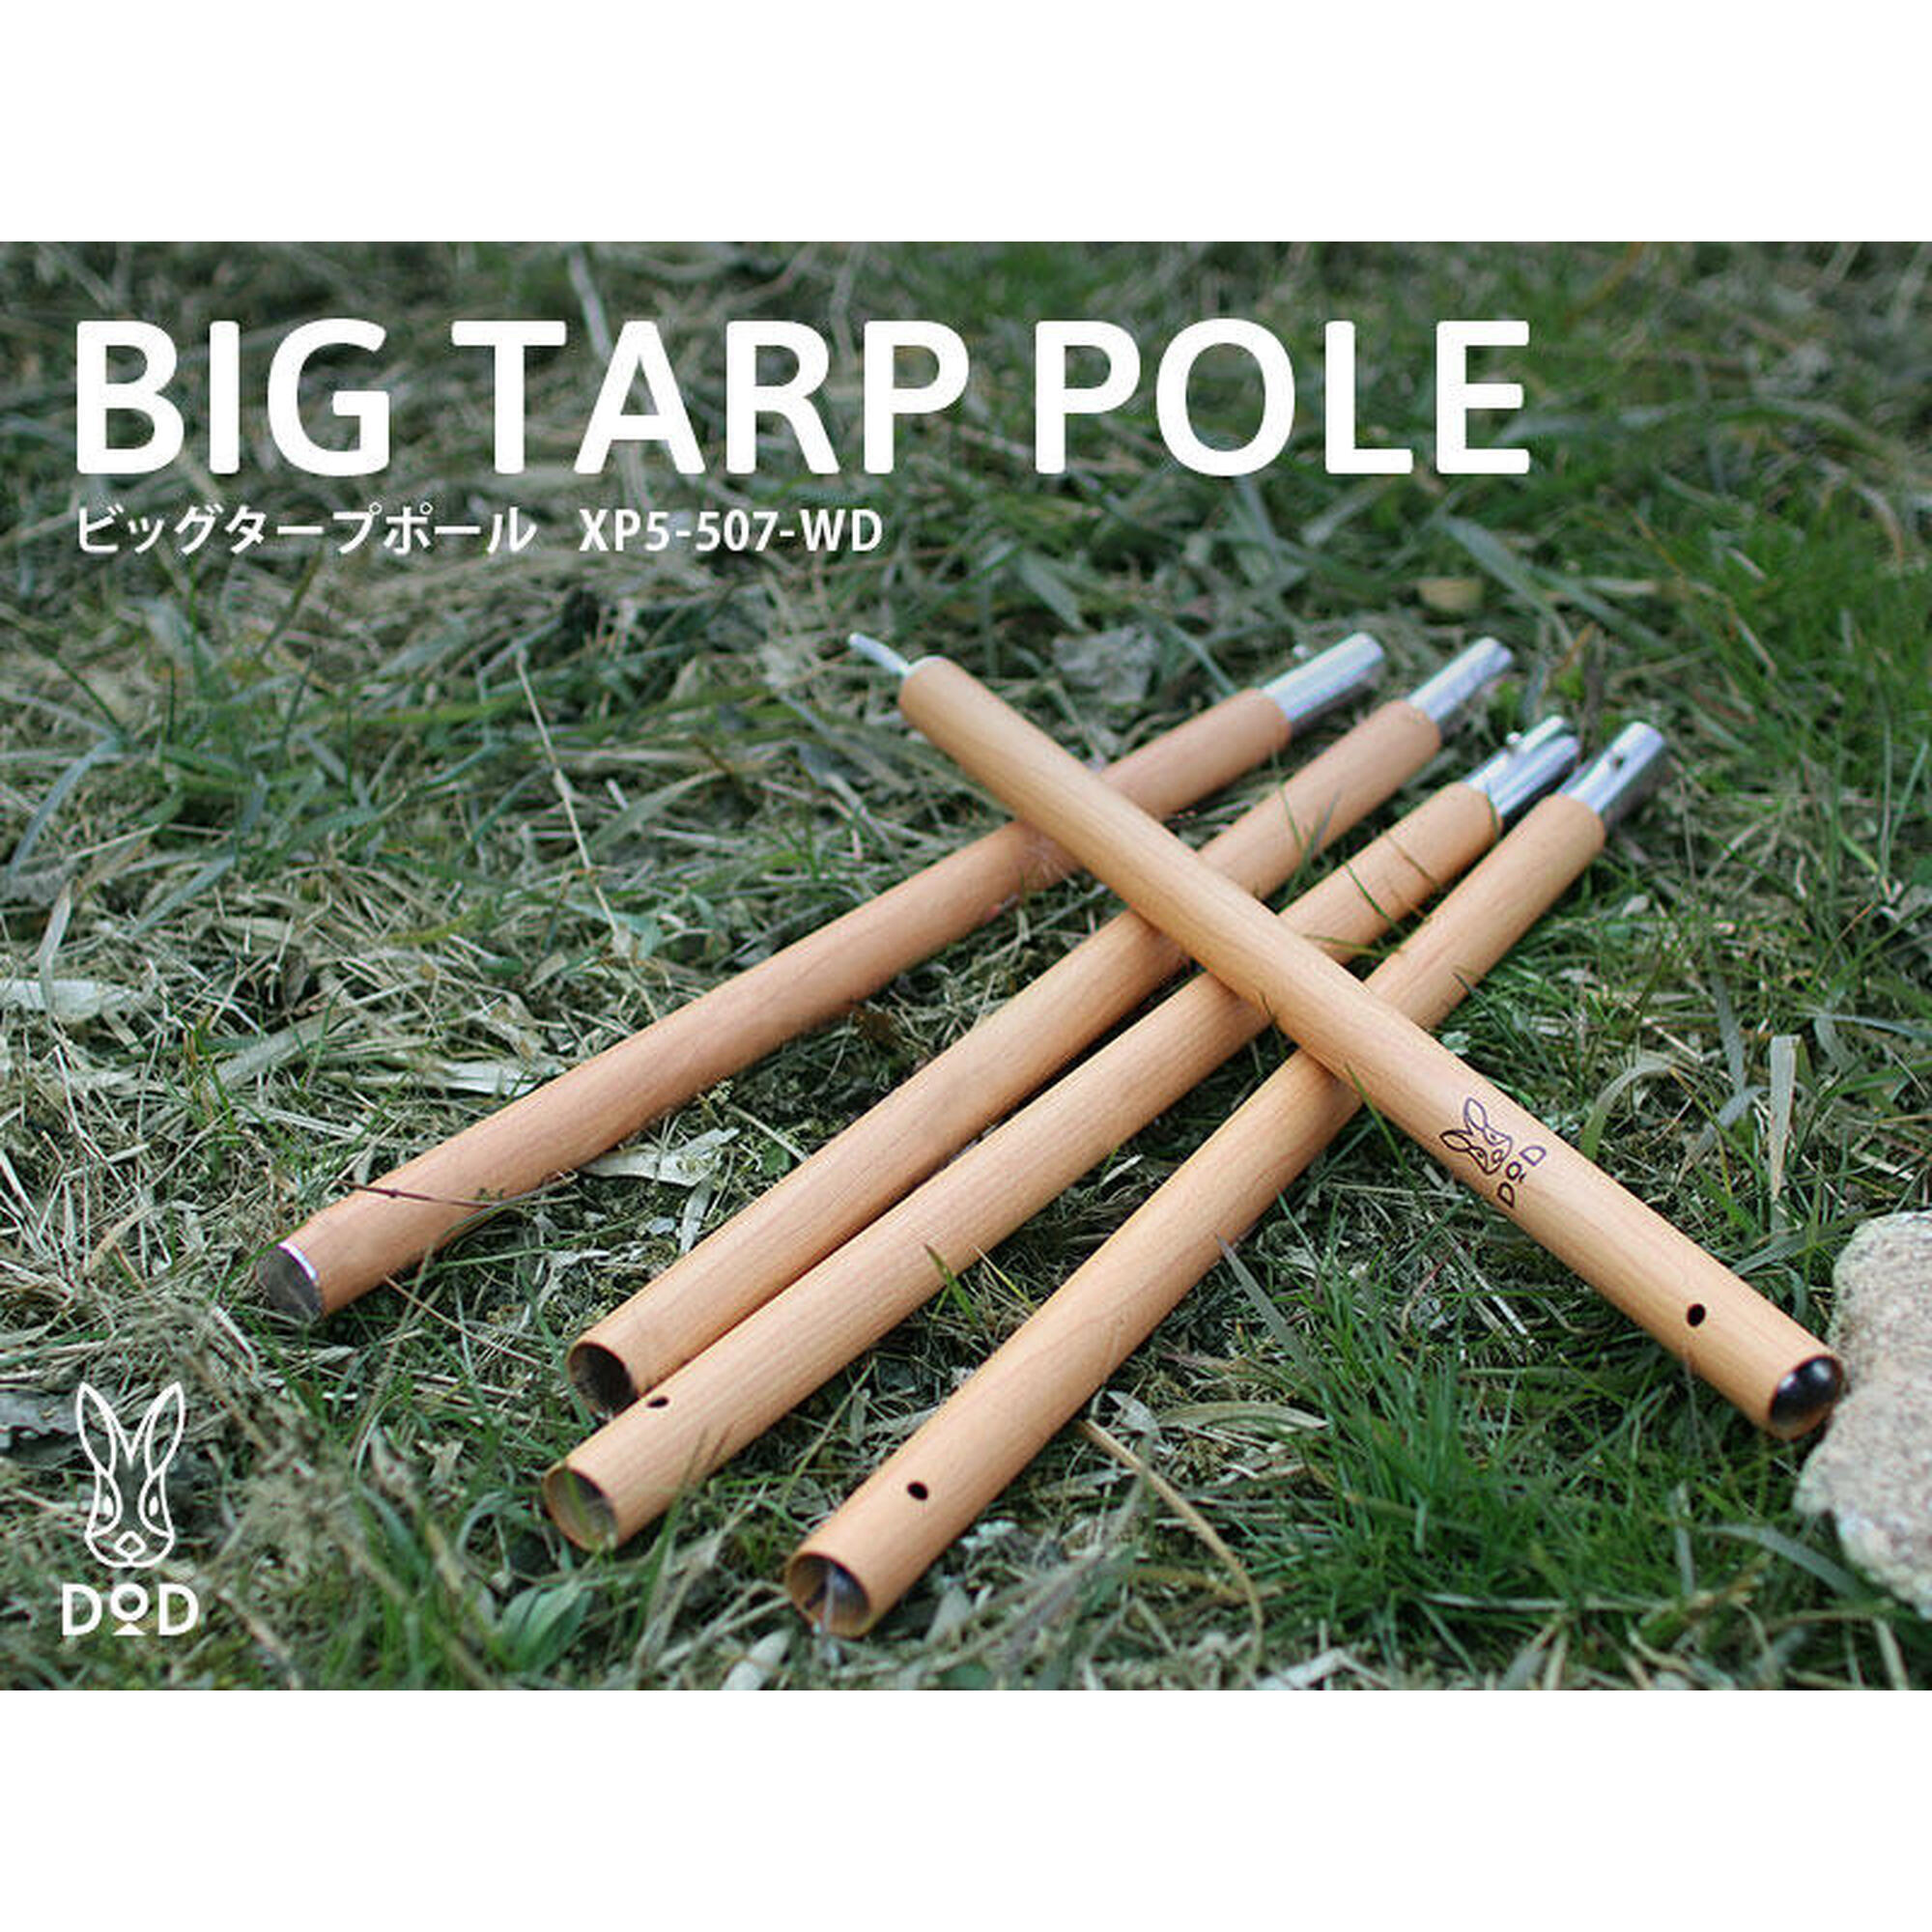 XP5-507-WD Big Tarp Pole - Wood